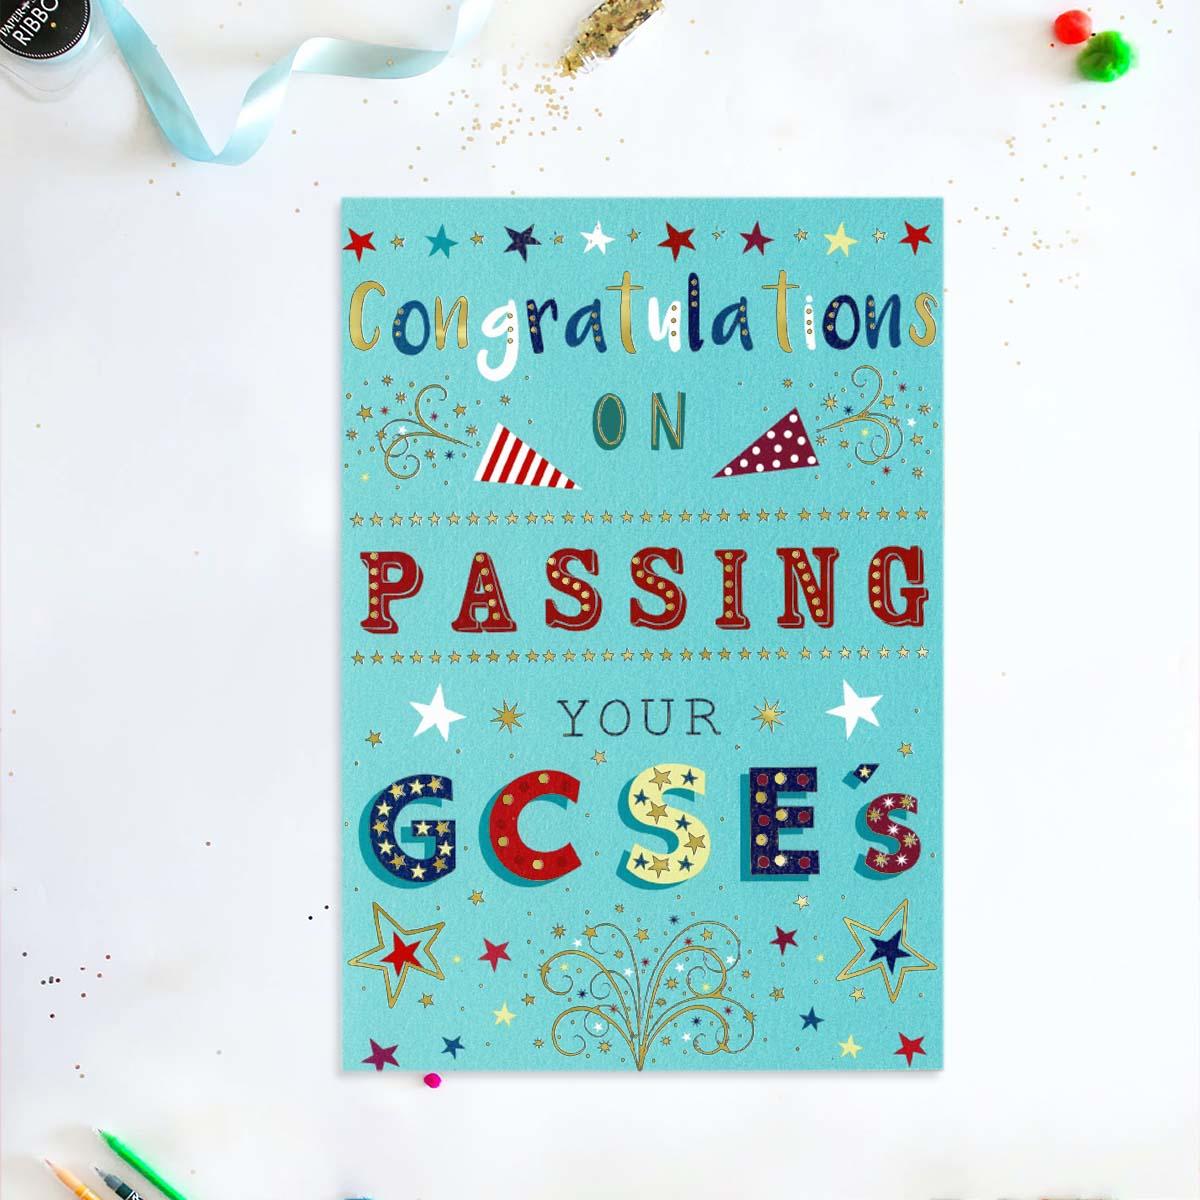 Passed GCSE's Greeting Card Displayed In Full